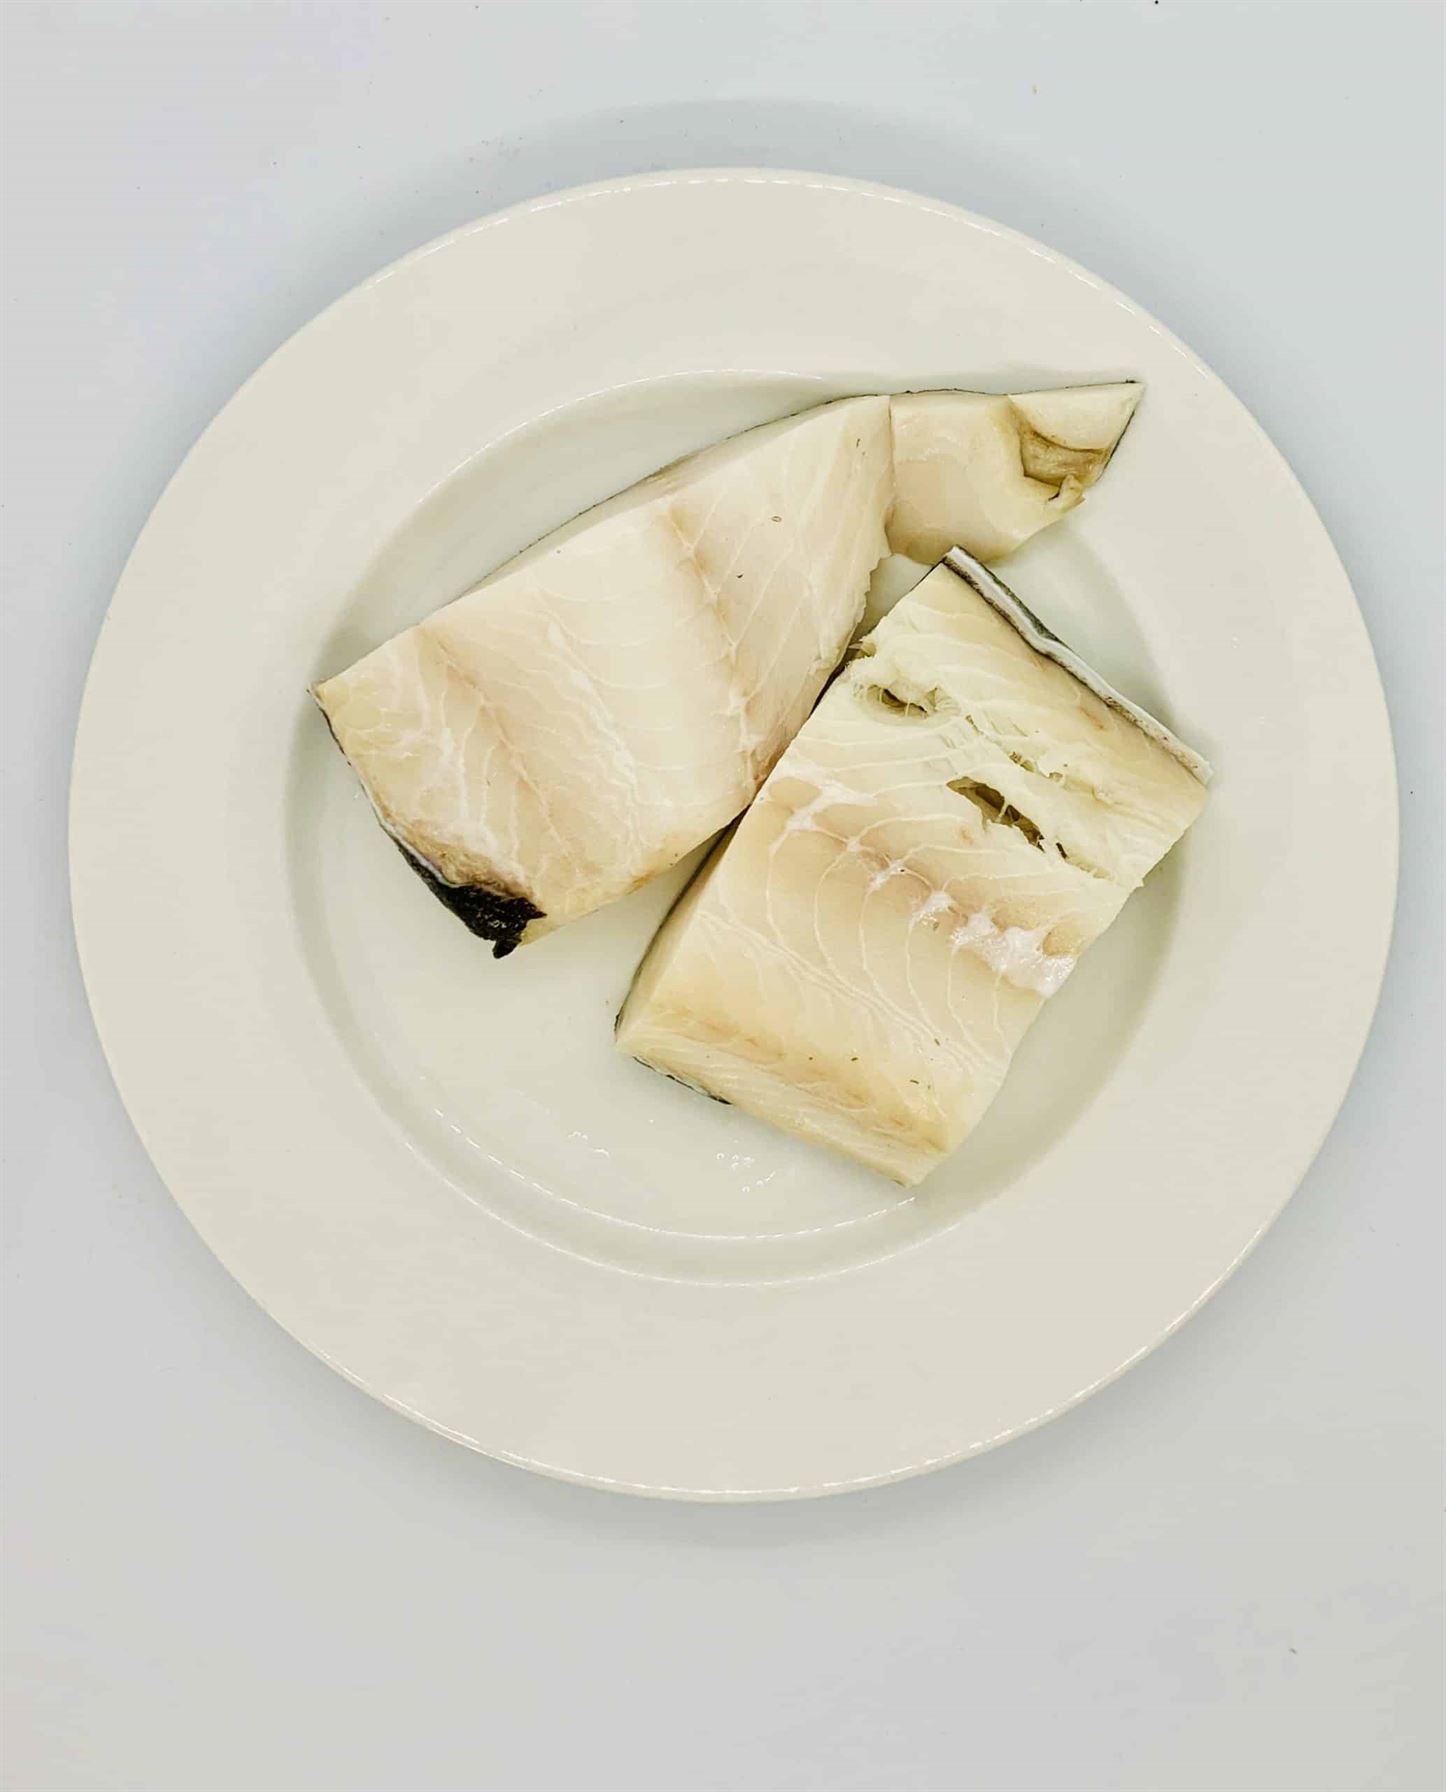 ChillaxBBQ Stay@Home Recipes #42 - Alaskan Black Cod 'w' Miso